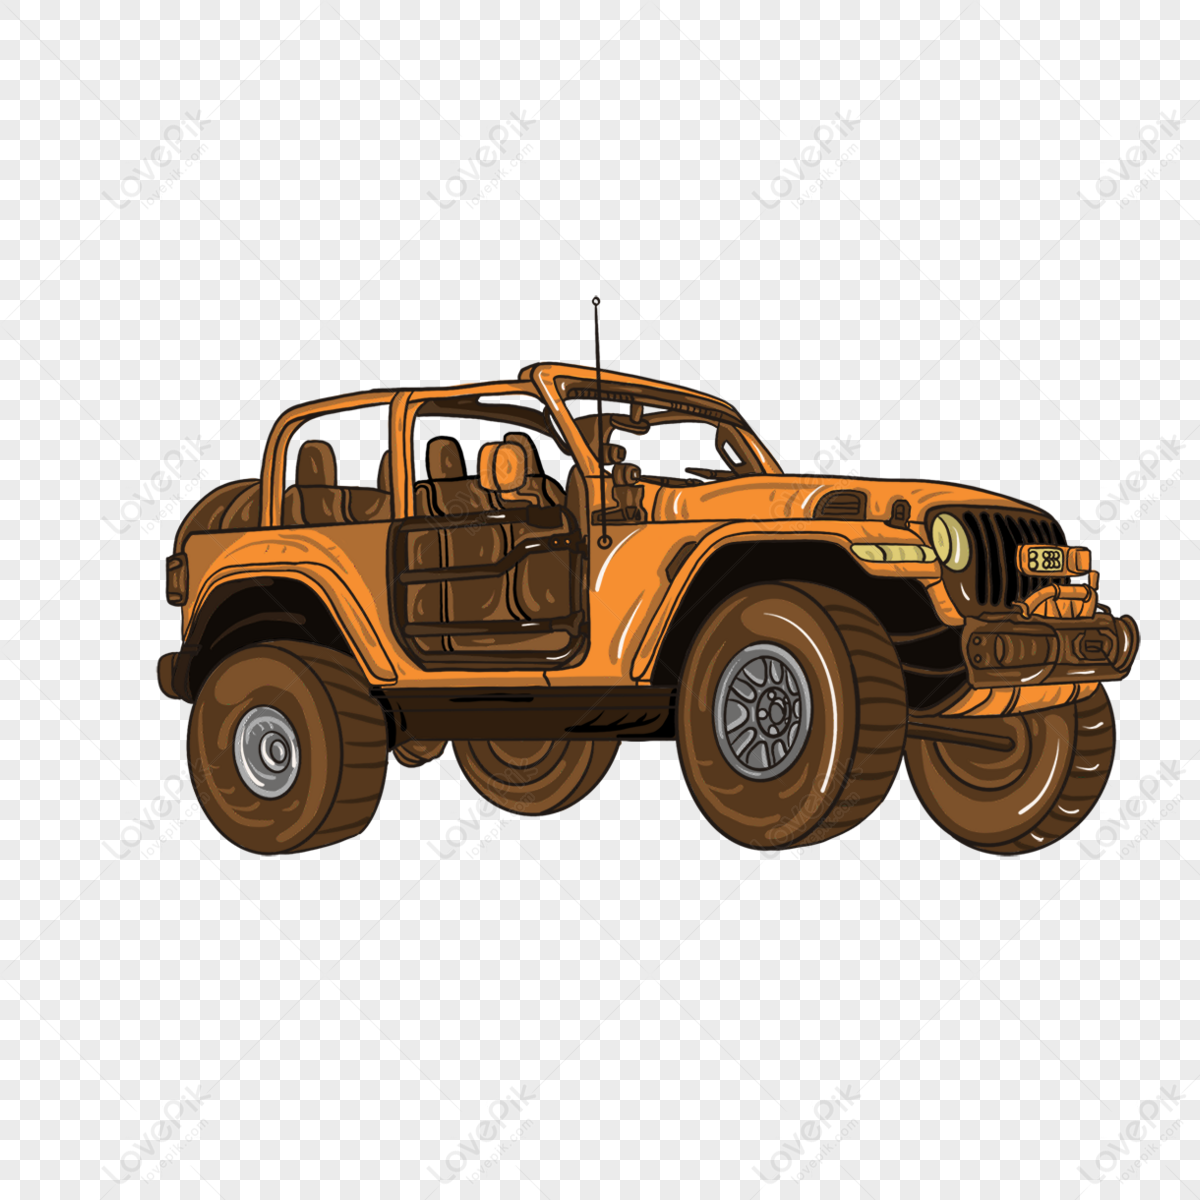 Orange Jeep clip art,side jeep,dashing jeep png hd transparent image